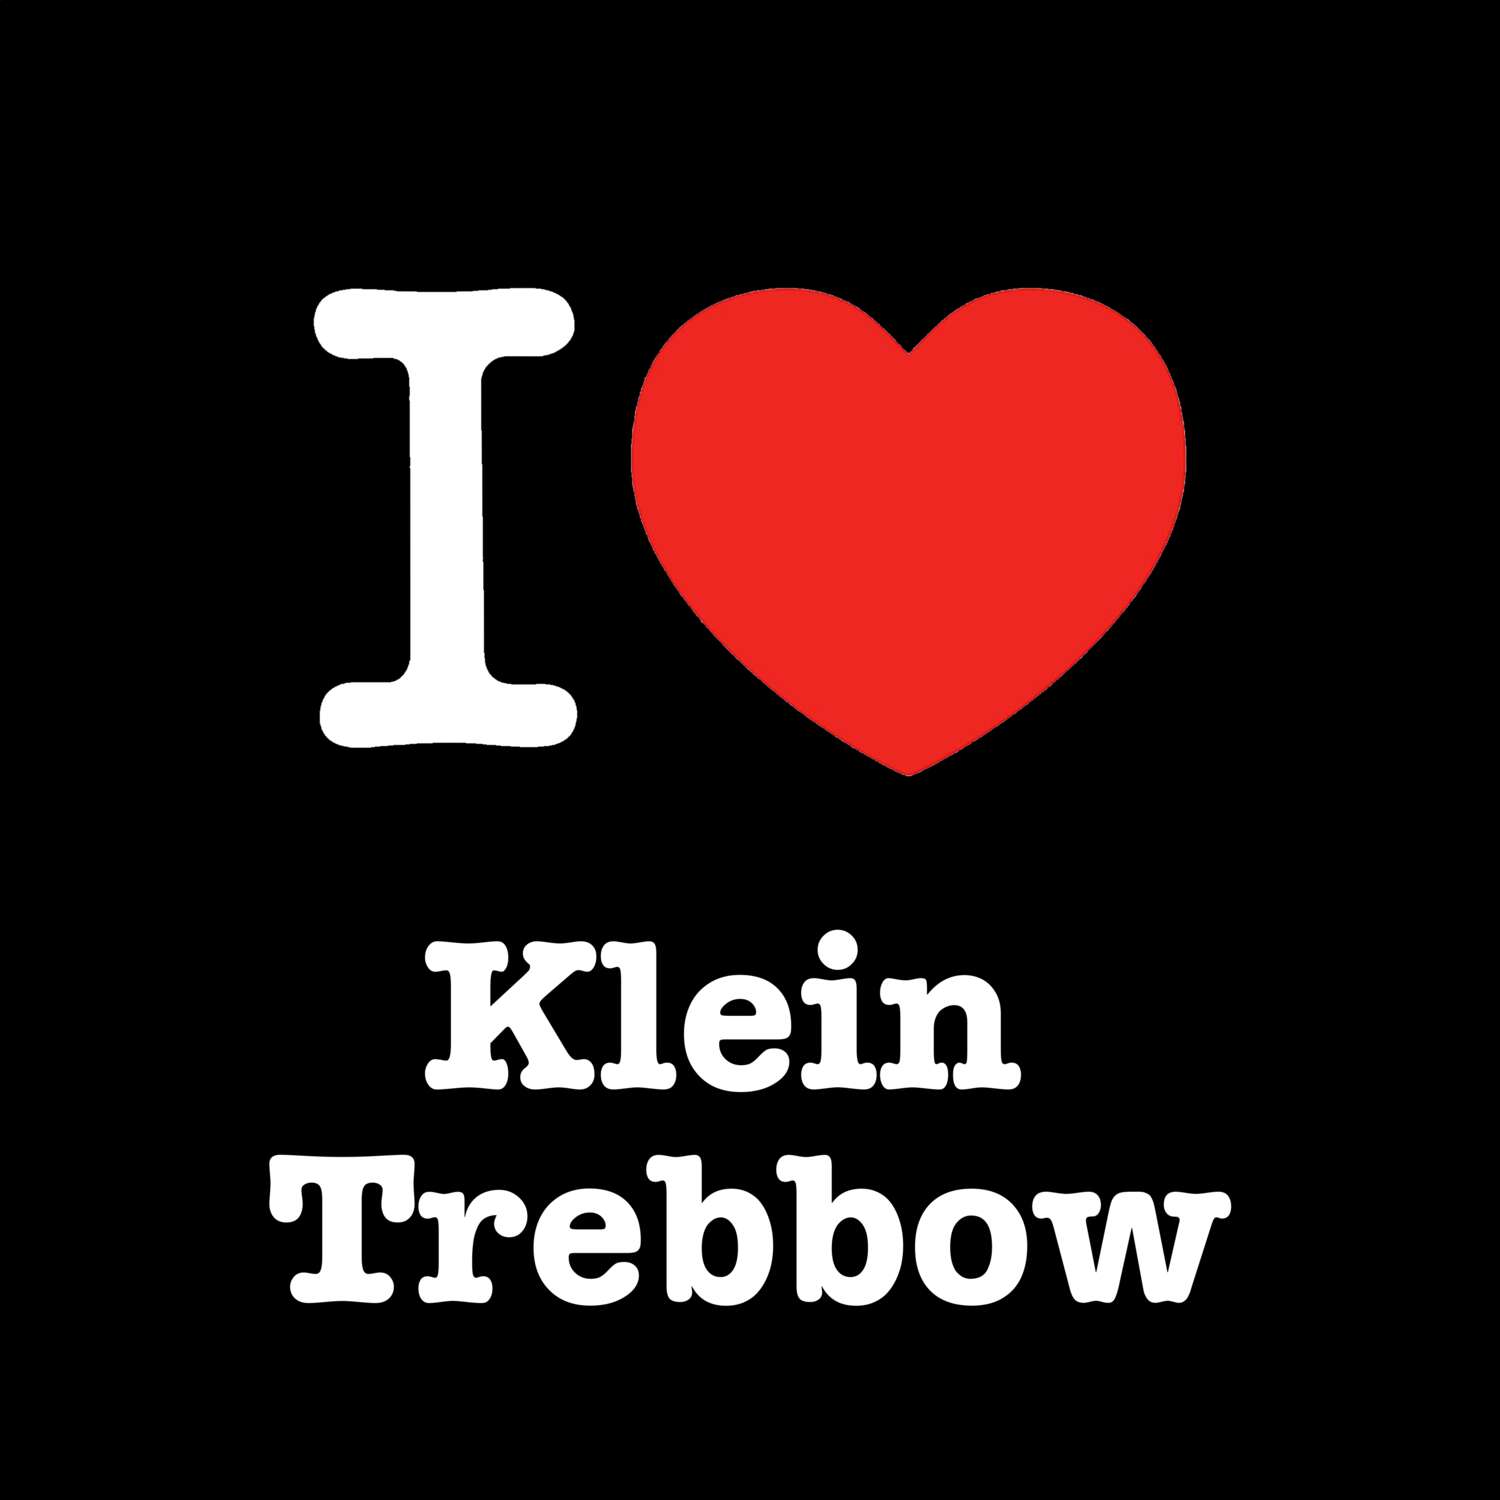 Klein Trebbow T-Shirt »I love«